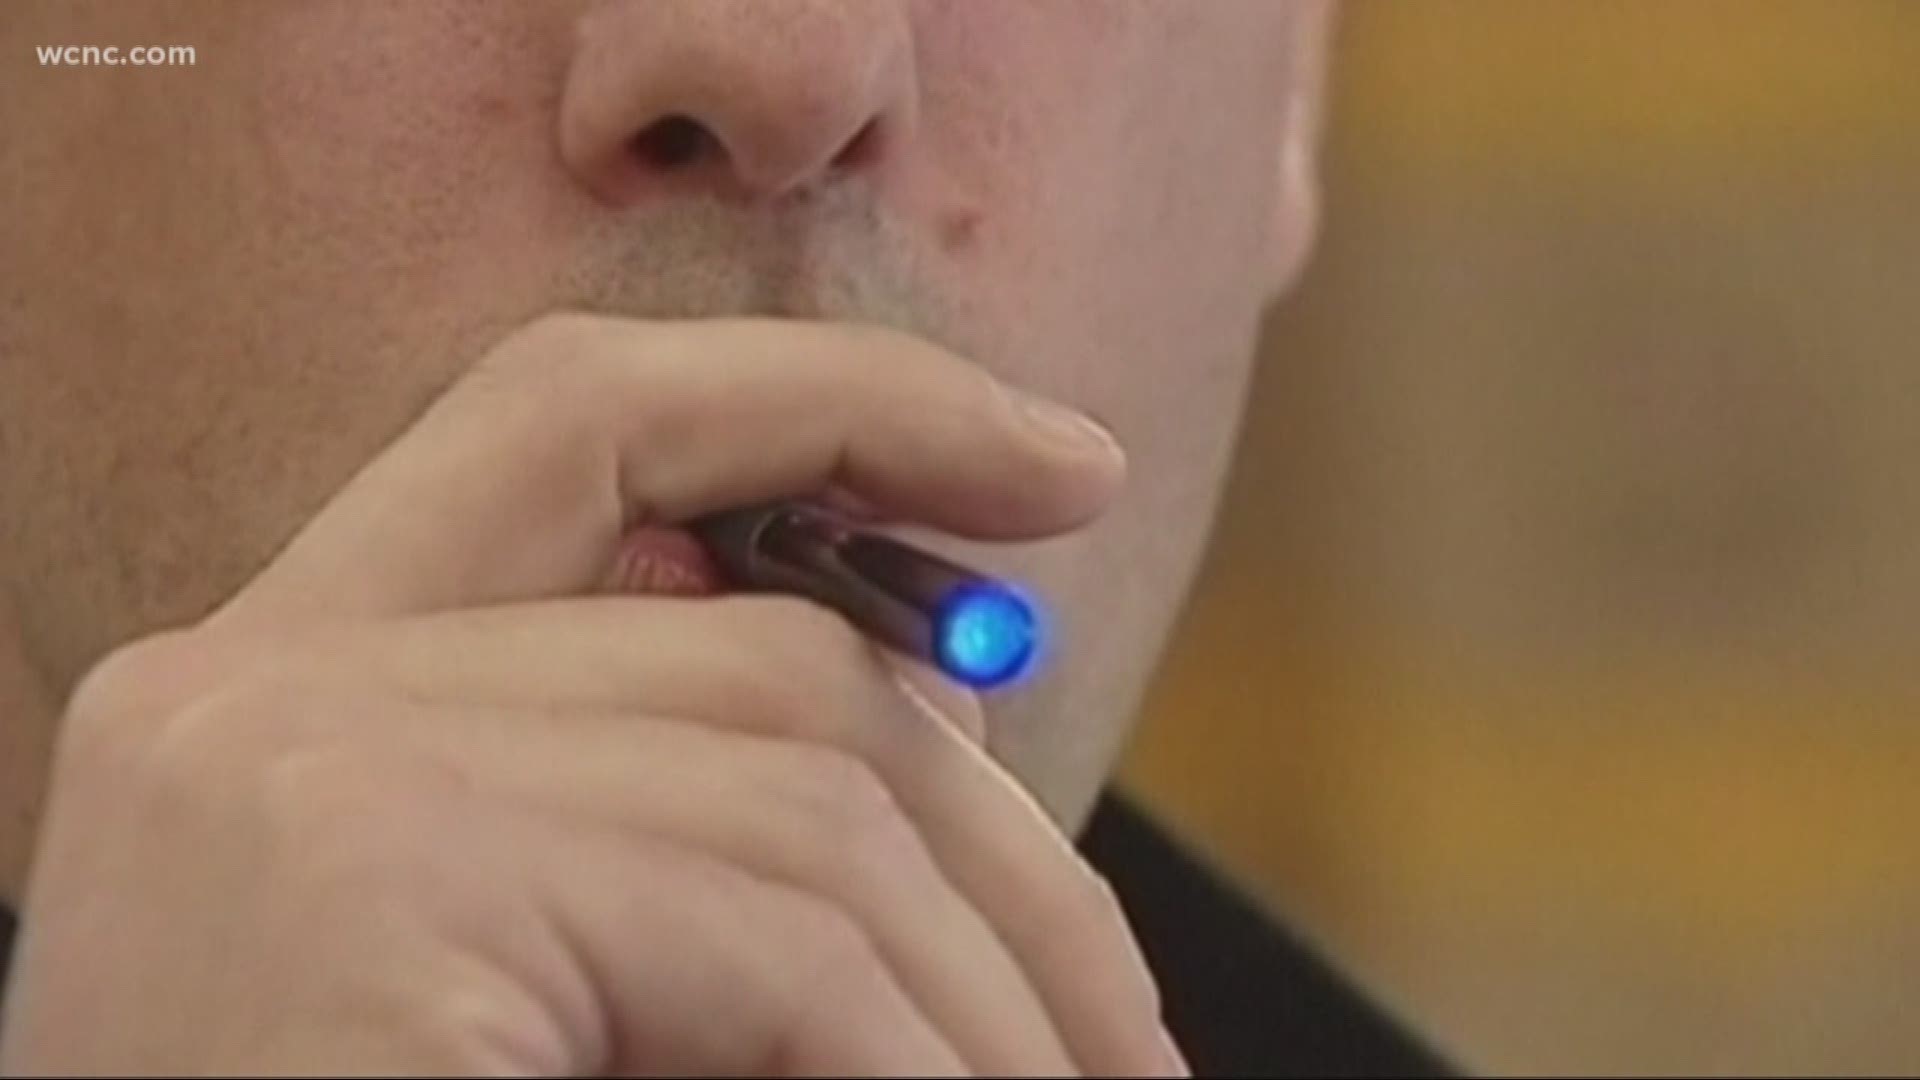 Study: More NC students using e-cigarettes